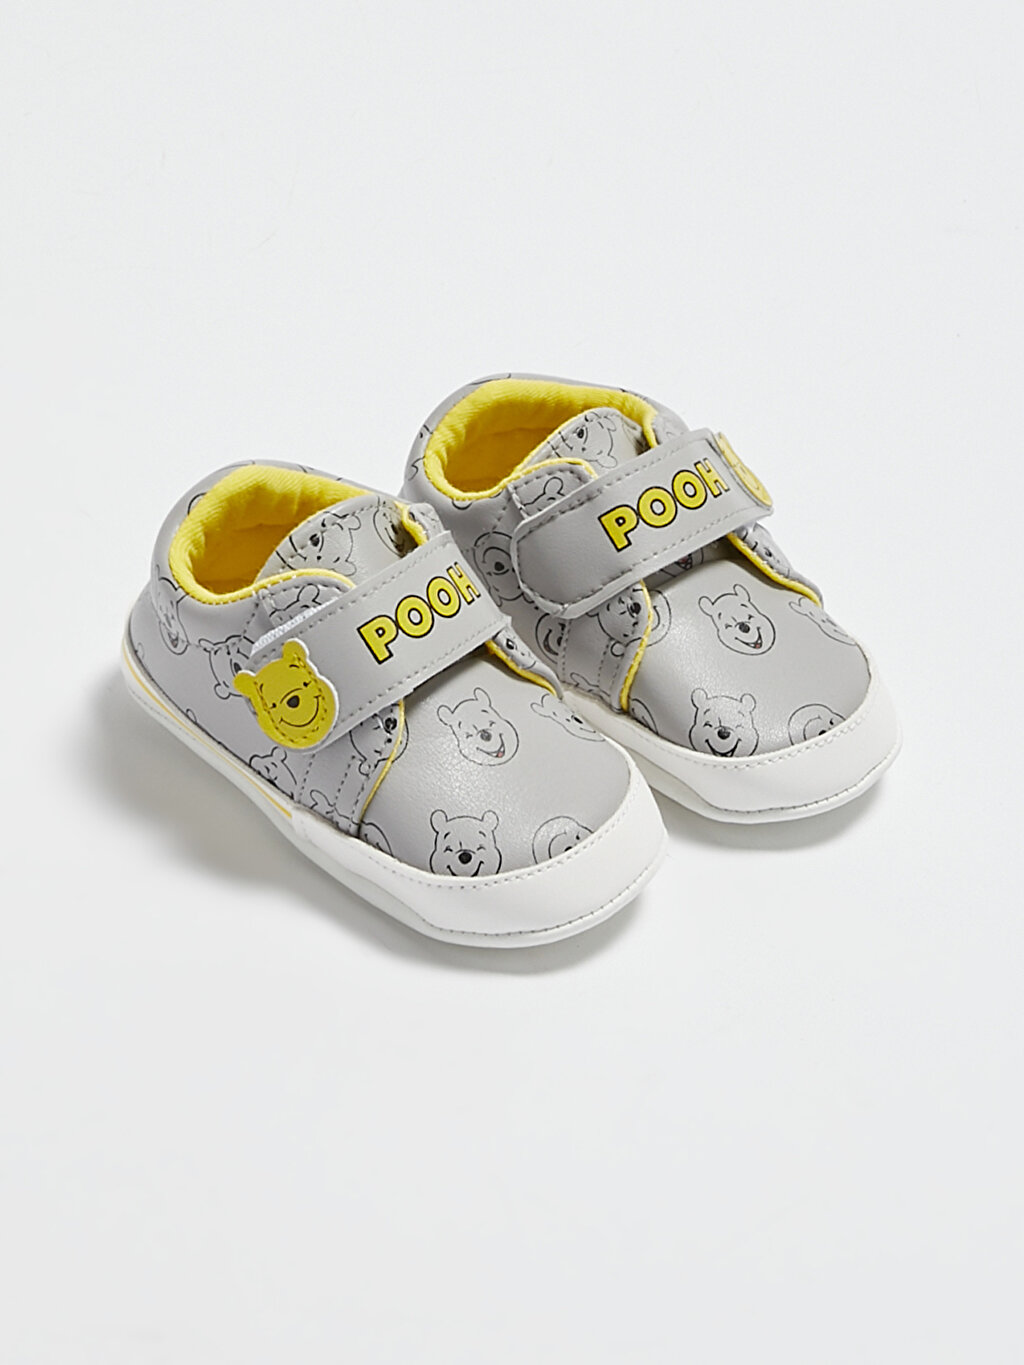 کفش نوزادی پسرانه پو pooh چسبی السی وایکیکی LC waikiki